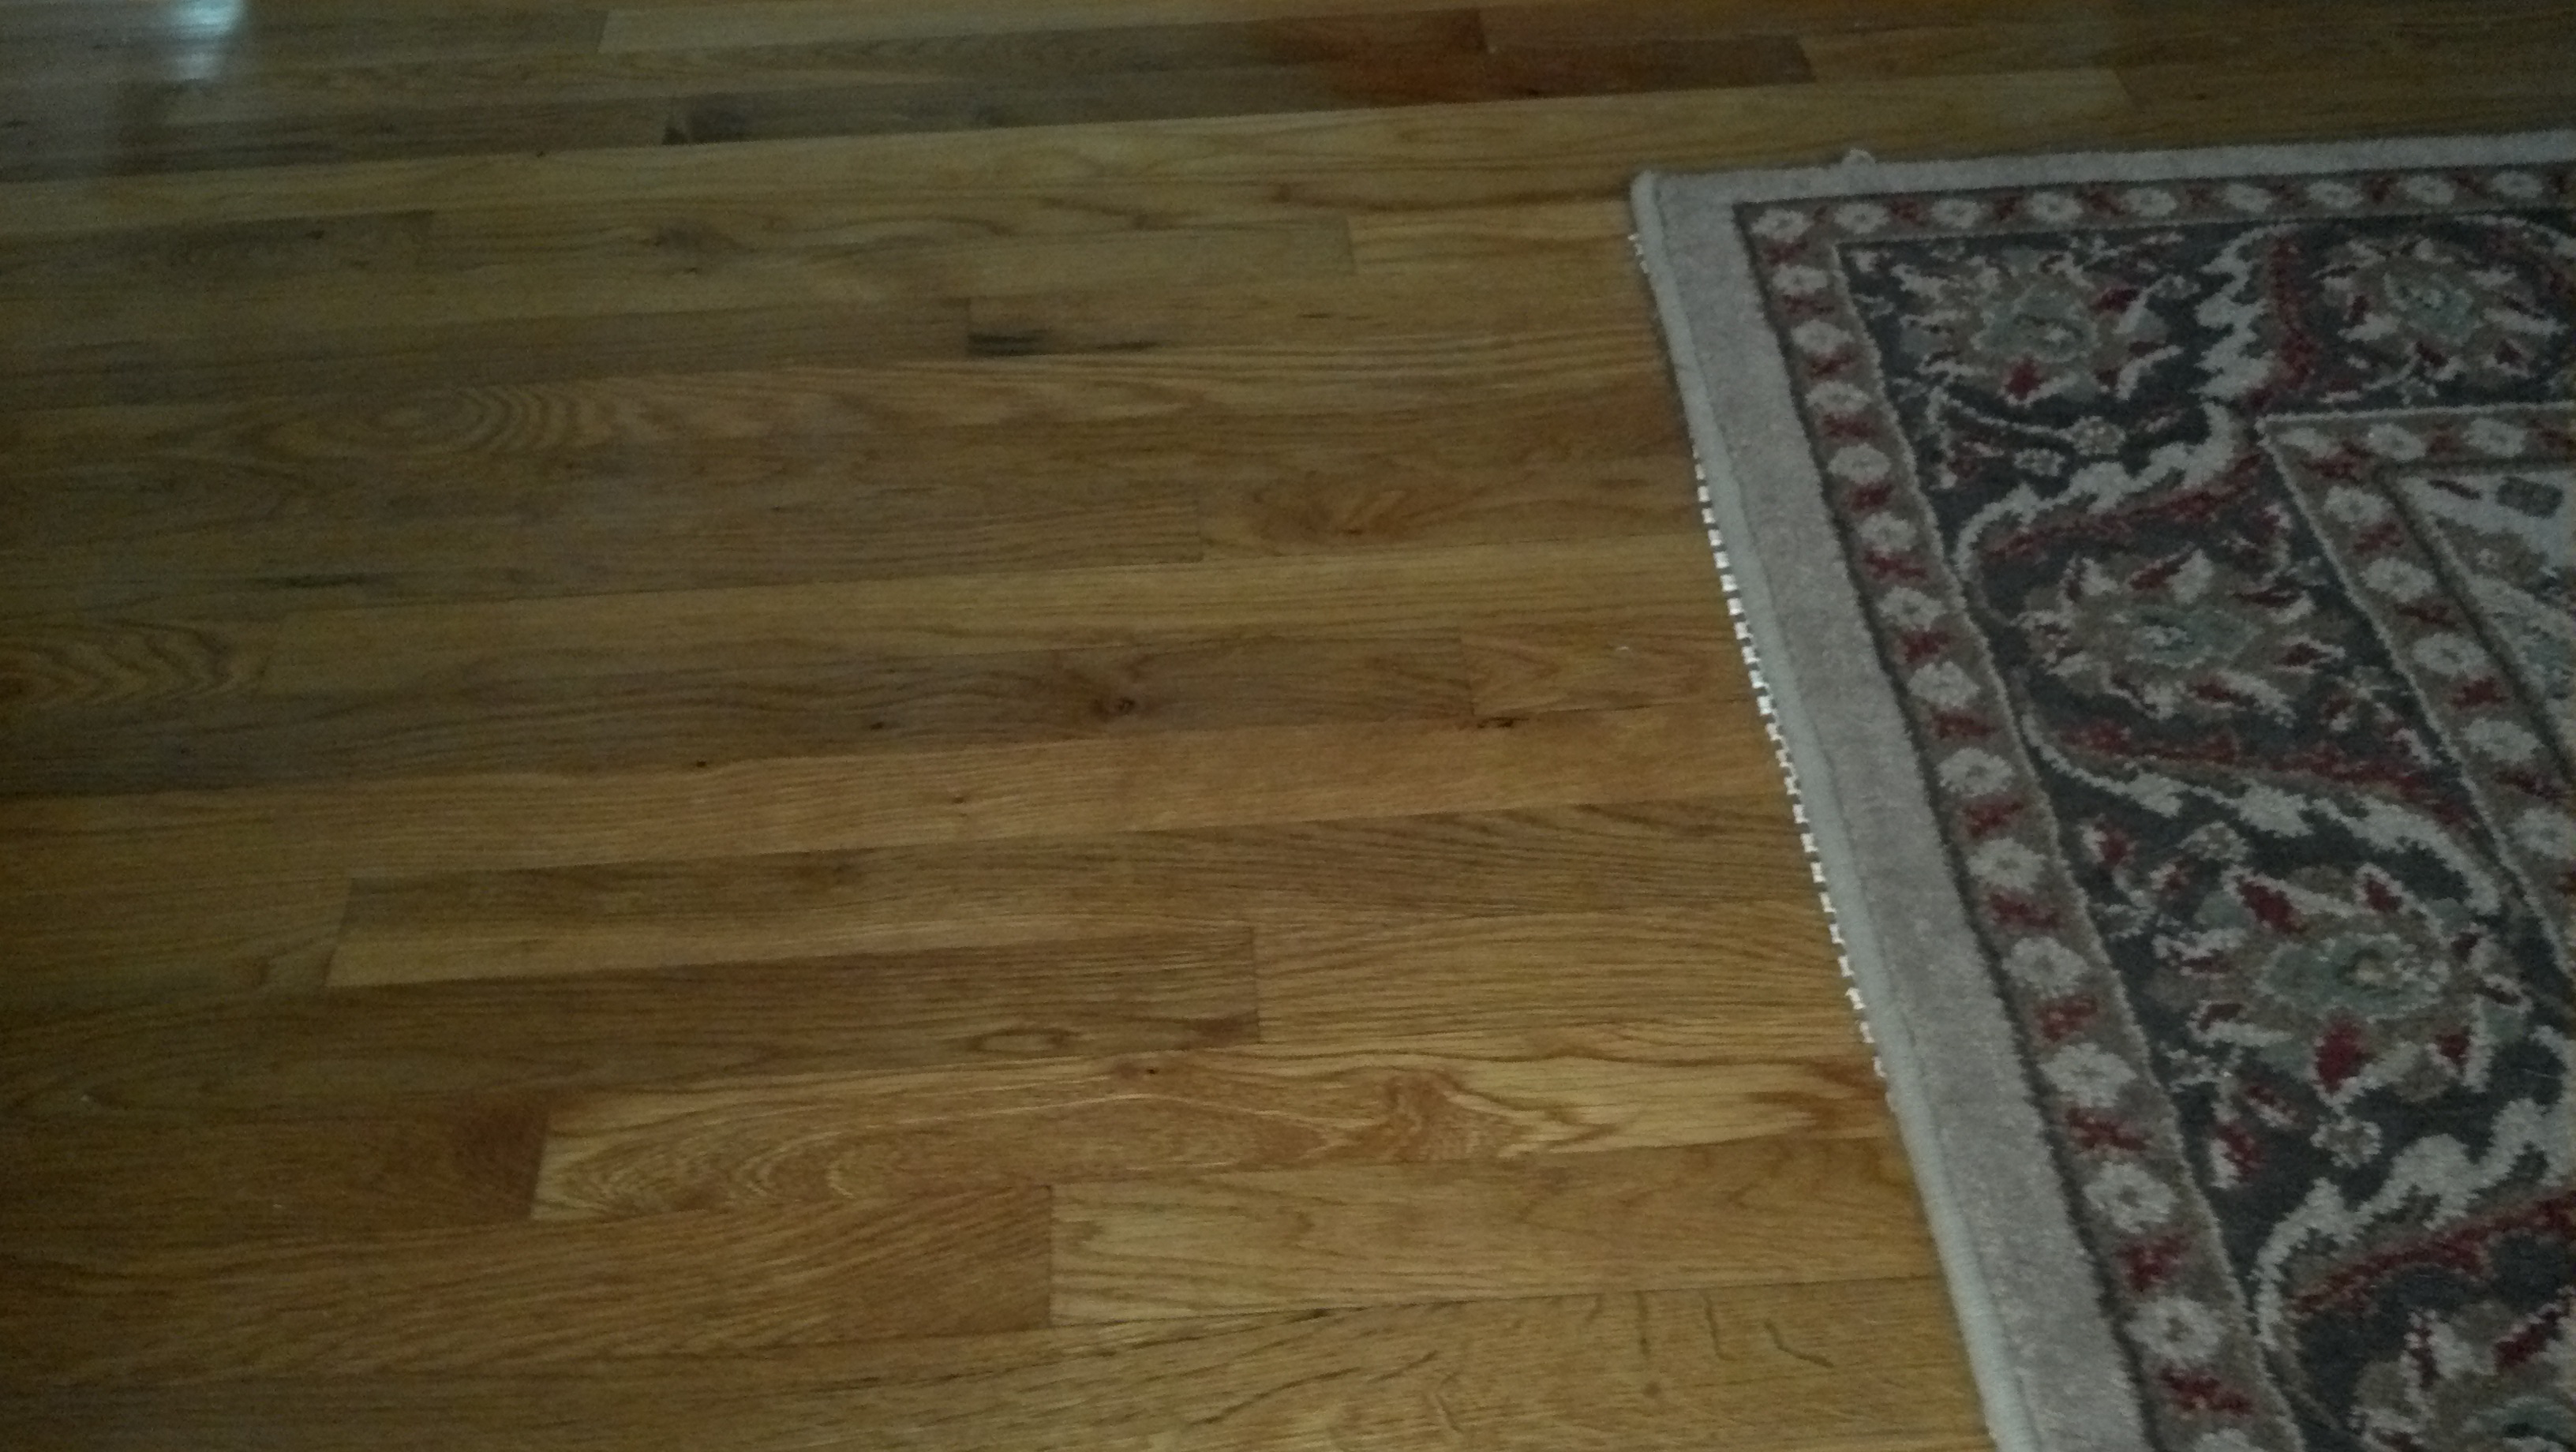 Floor Magician's offers custom hardwood floors